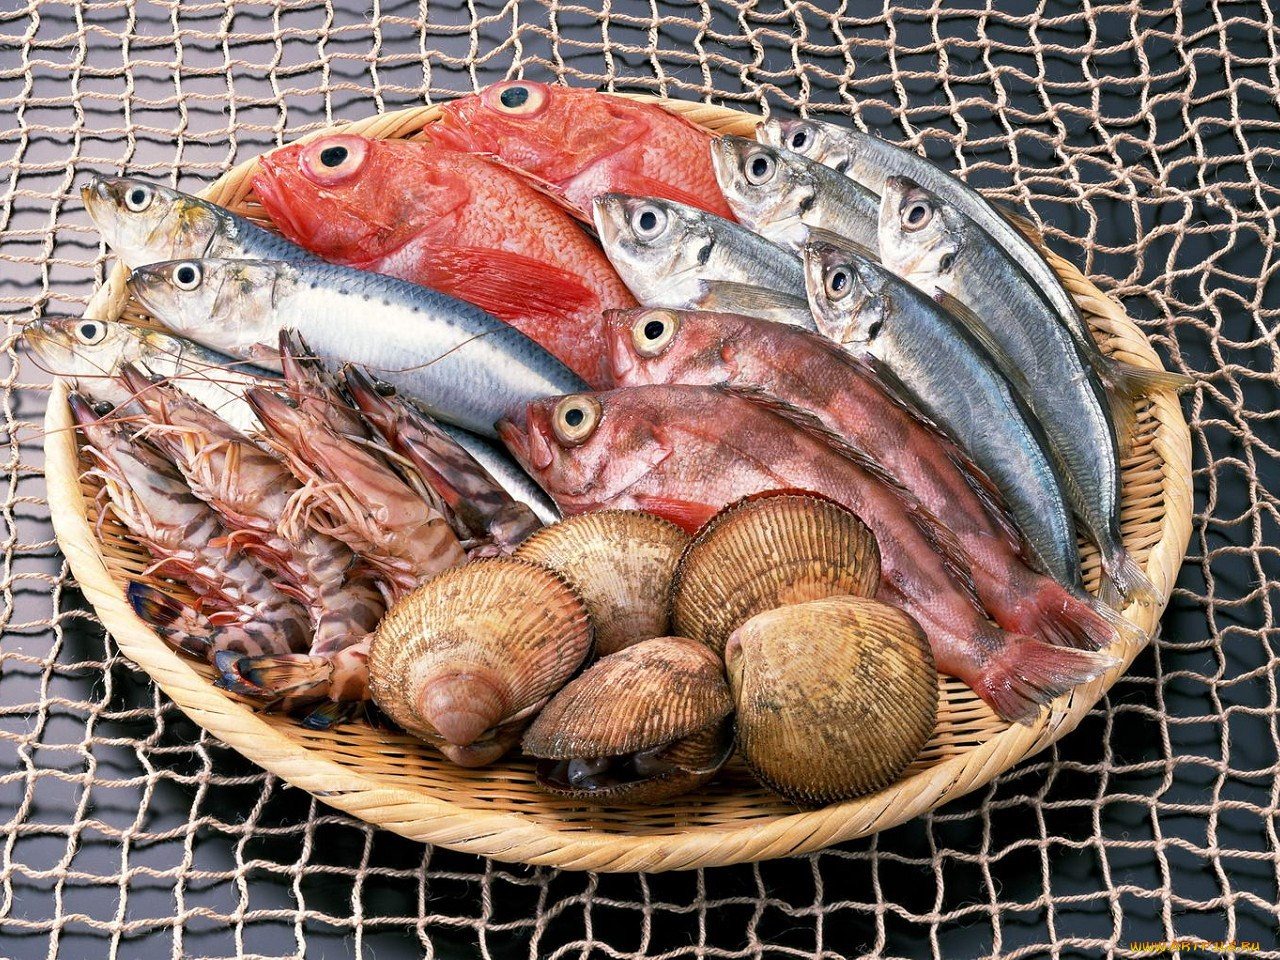 Fish product. Рыбная продукция. Рыба еда. Морская рыба и морепродукты. Рыба съедобная.